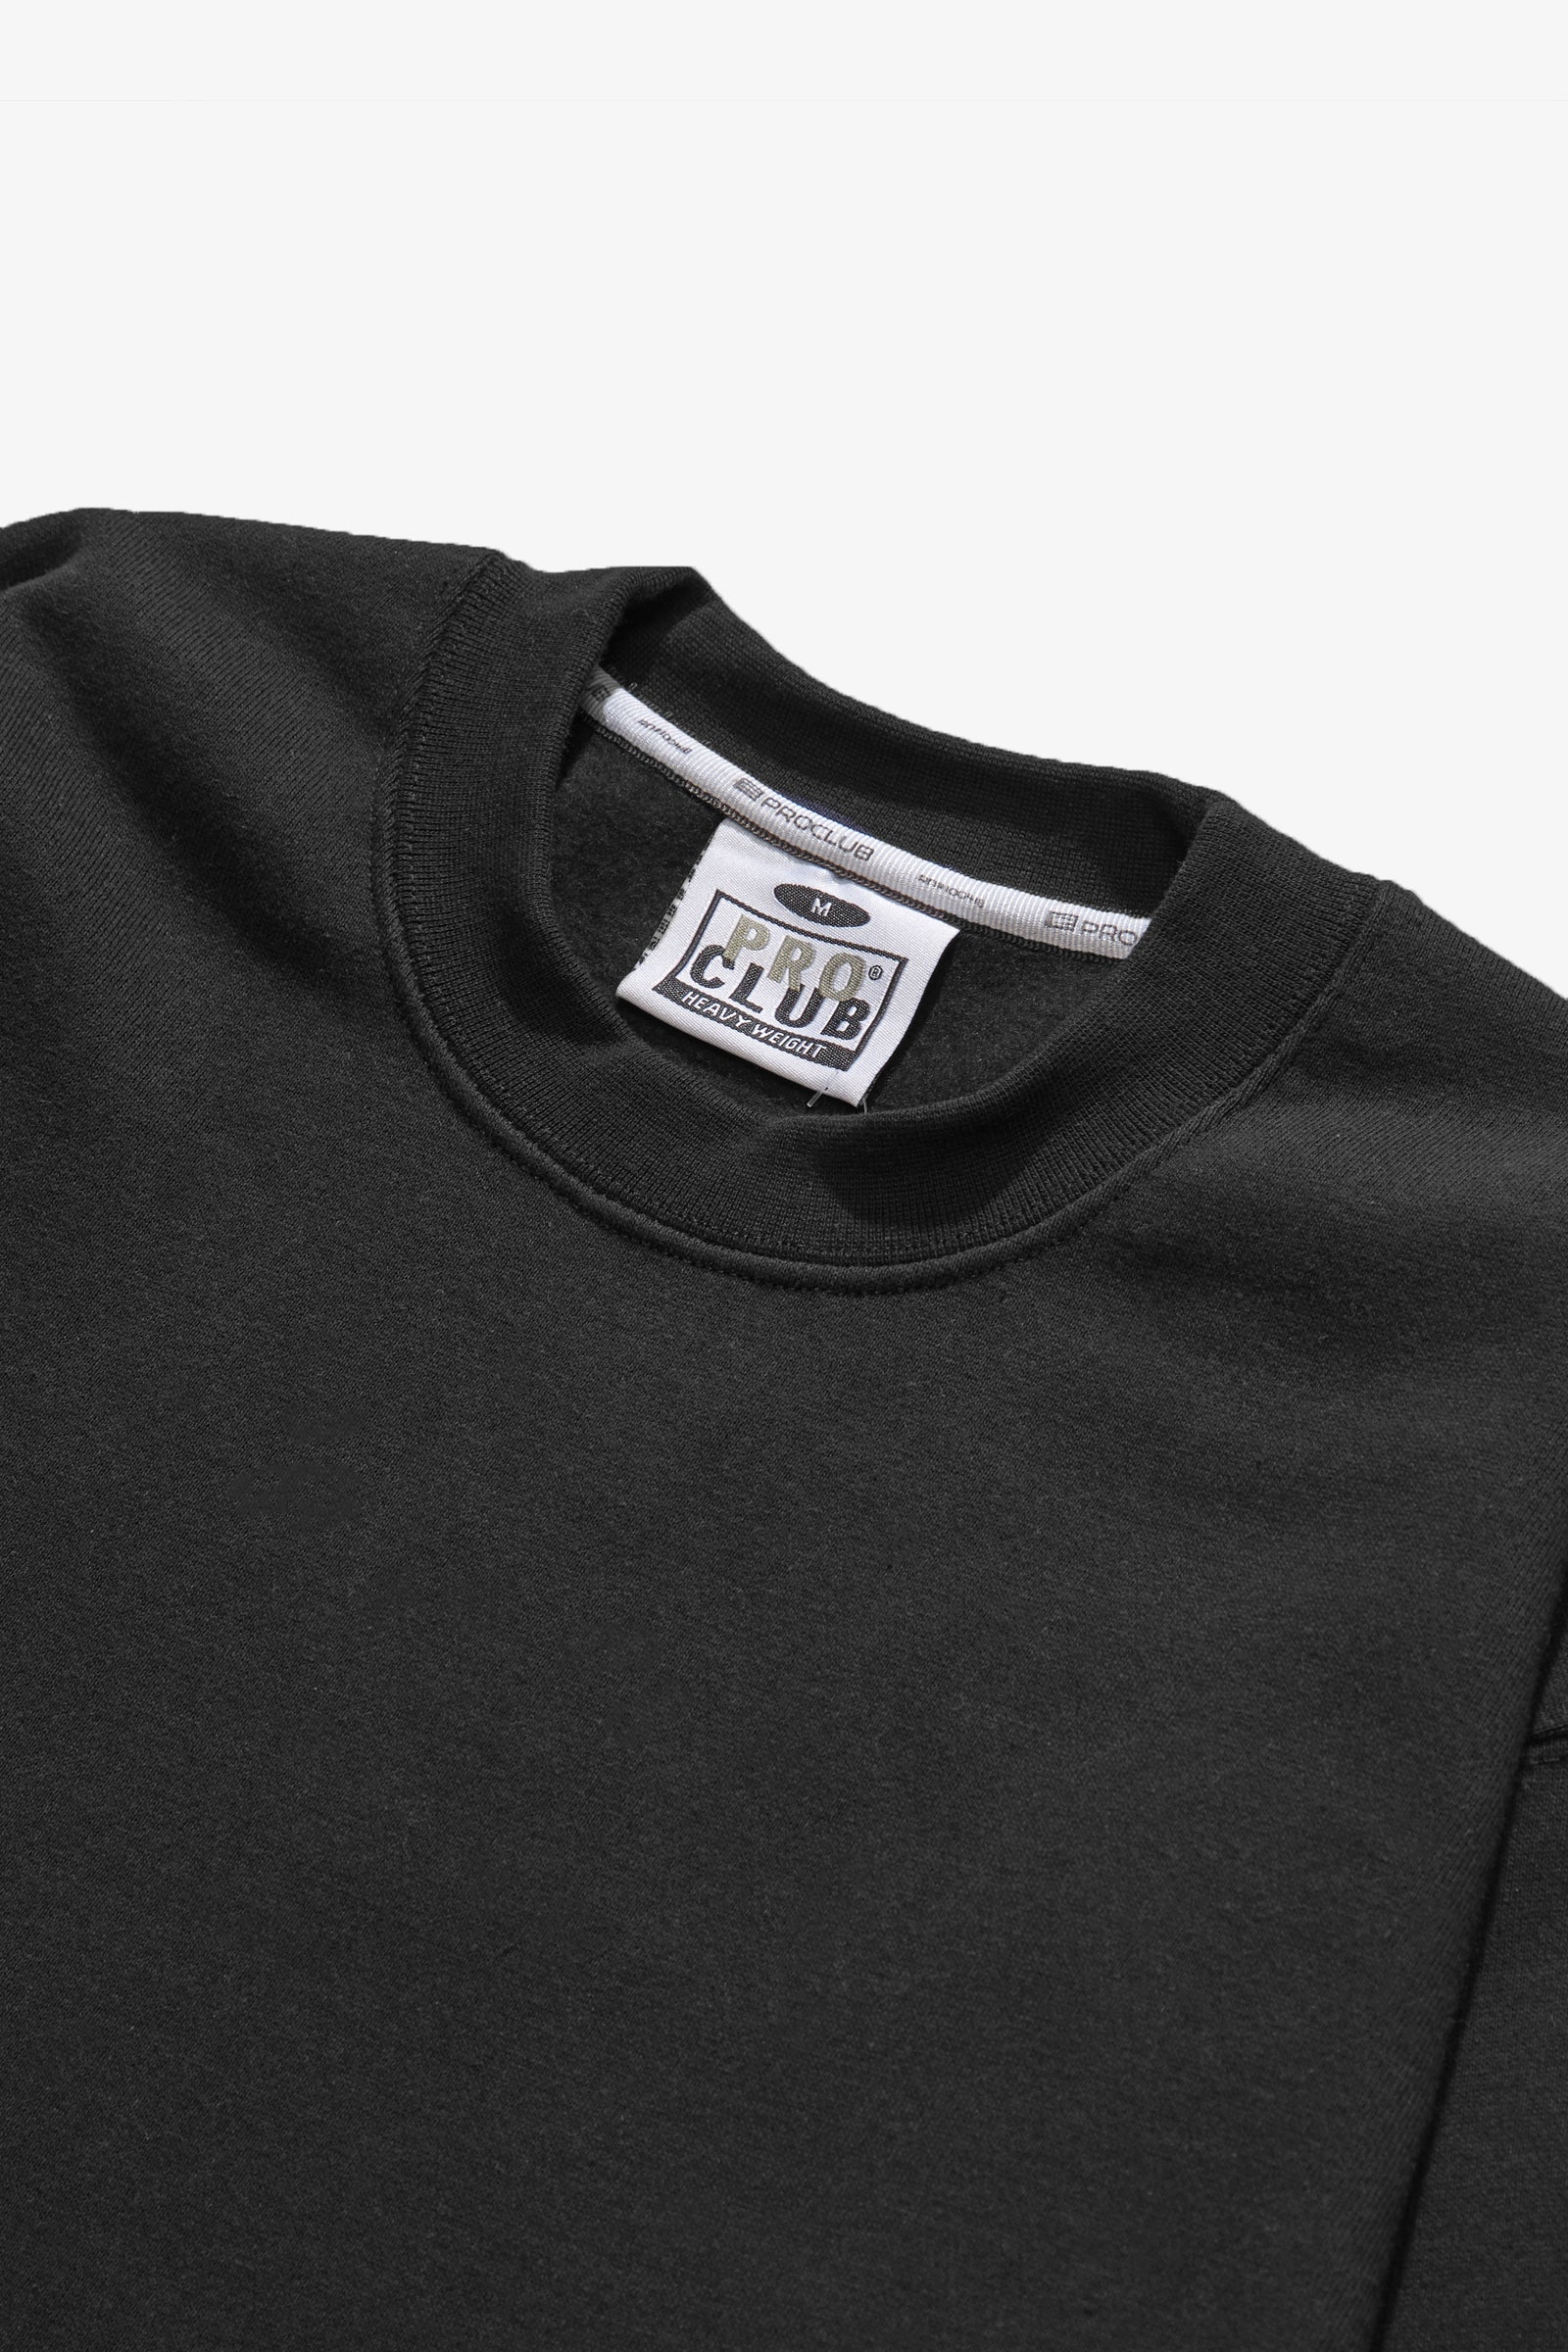 Pro Club - Heavyweight Crewneck Sweatshirt - Black | Blacksmith Store